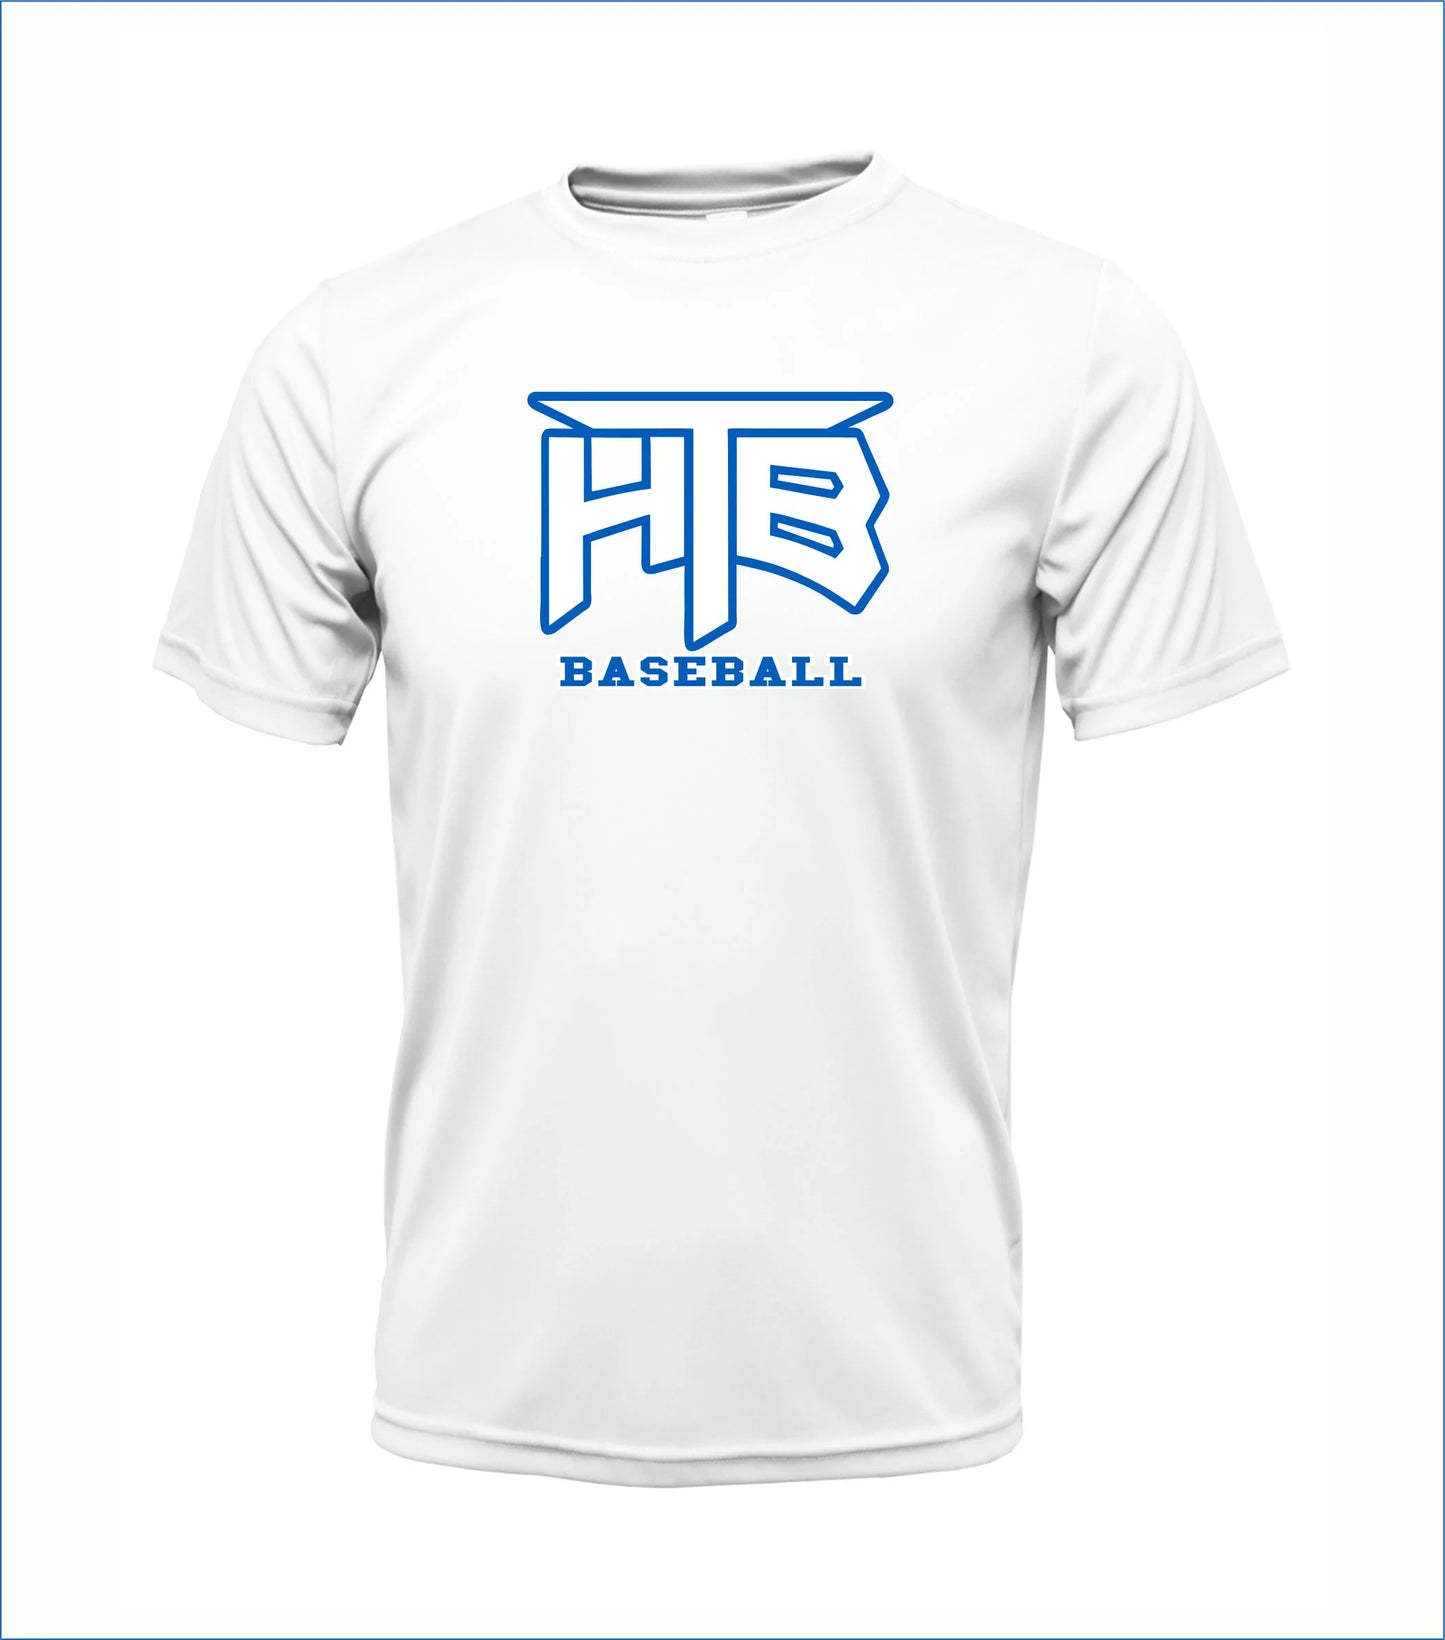 HTB Baseball Short Sleeve Cotton T-Shirt